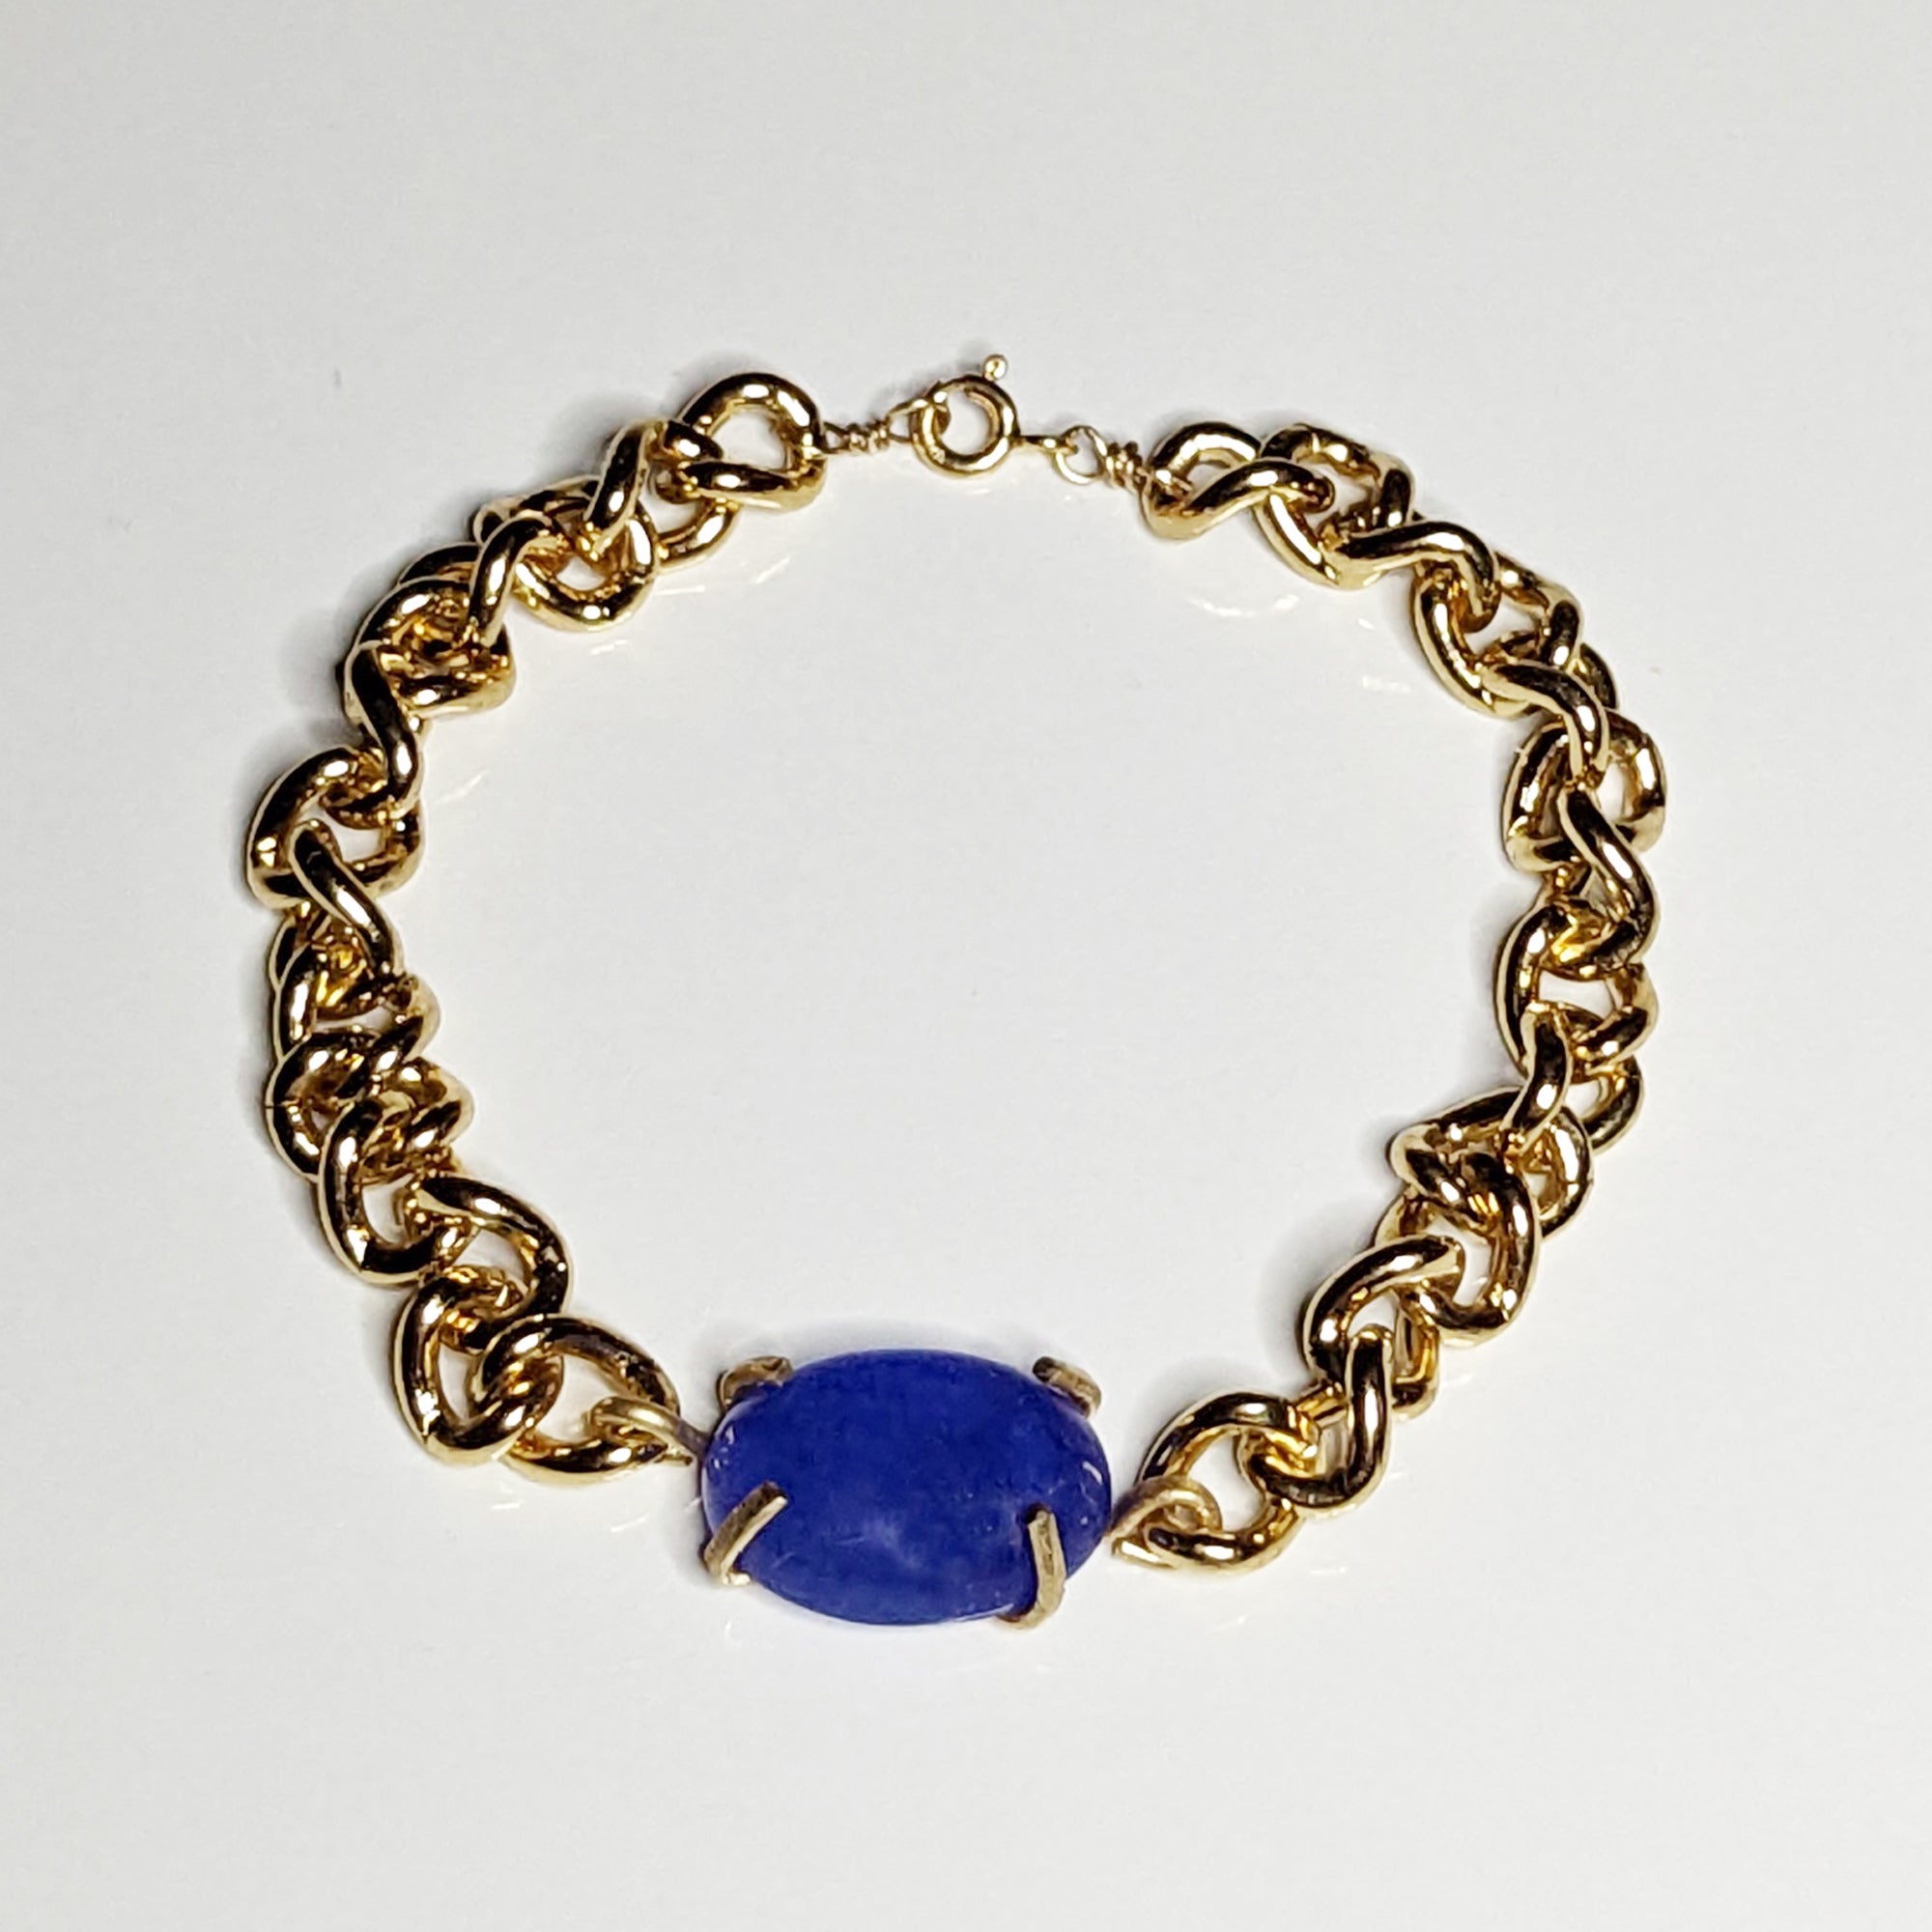 The Blue Jewel Bracelet